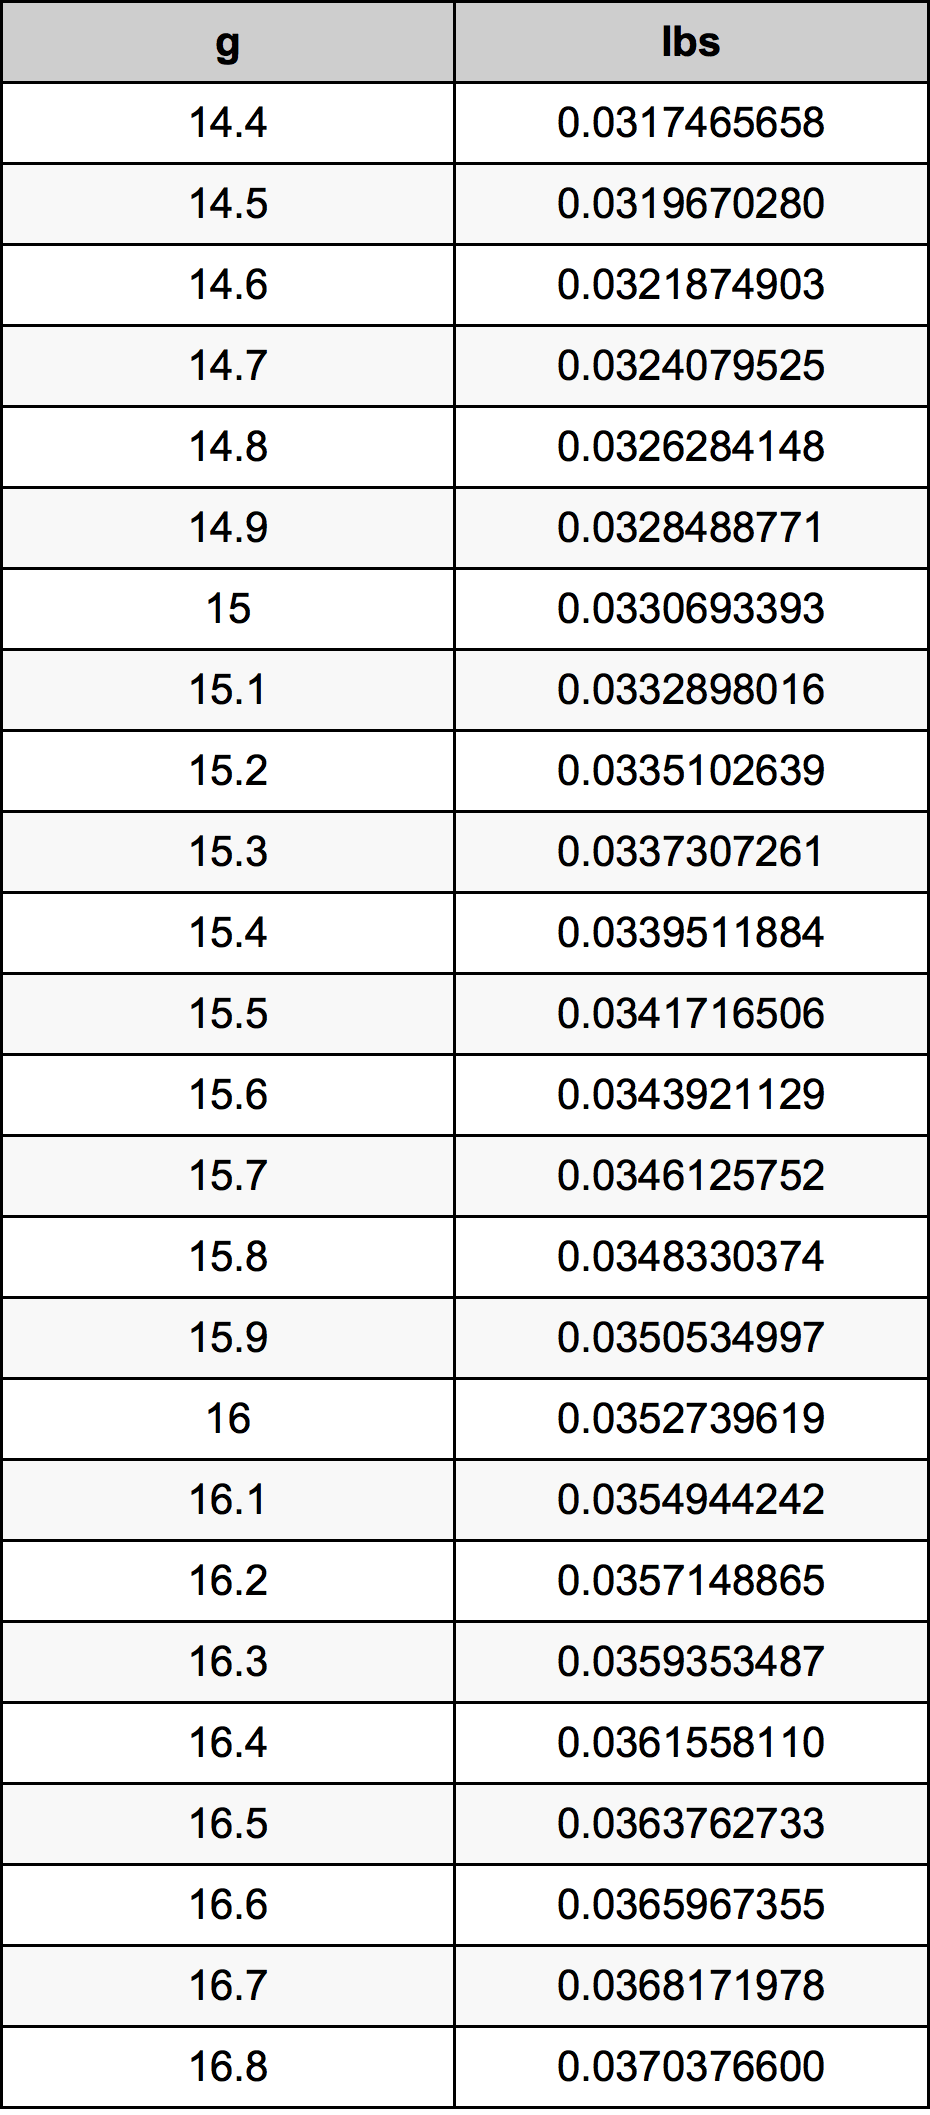 15.6 غرام جدول تحويل